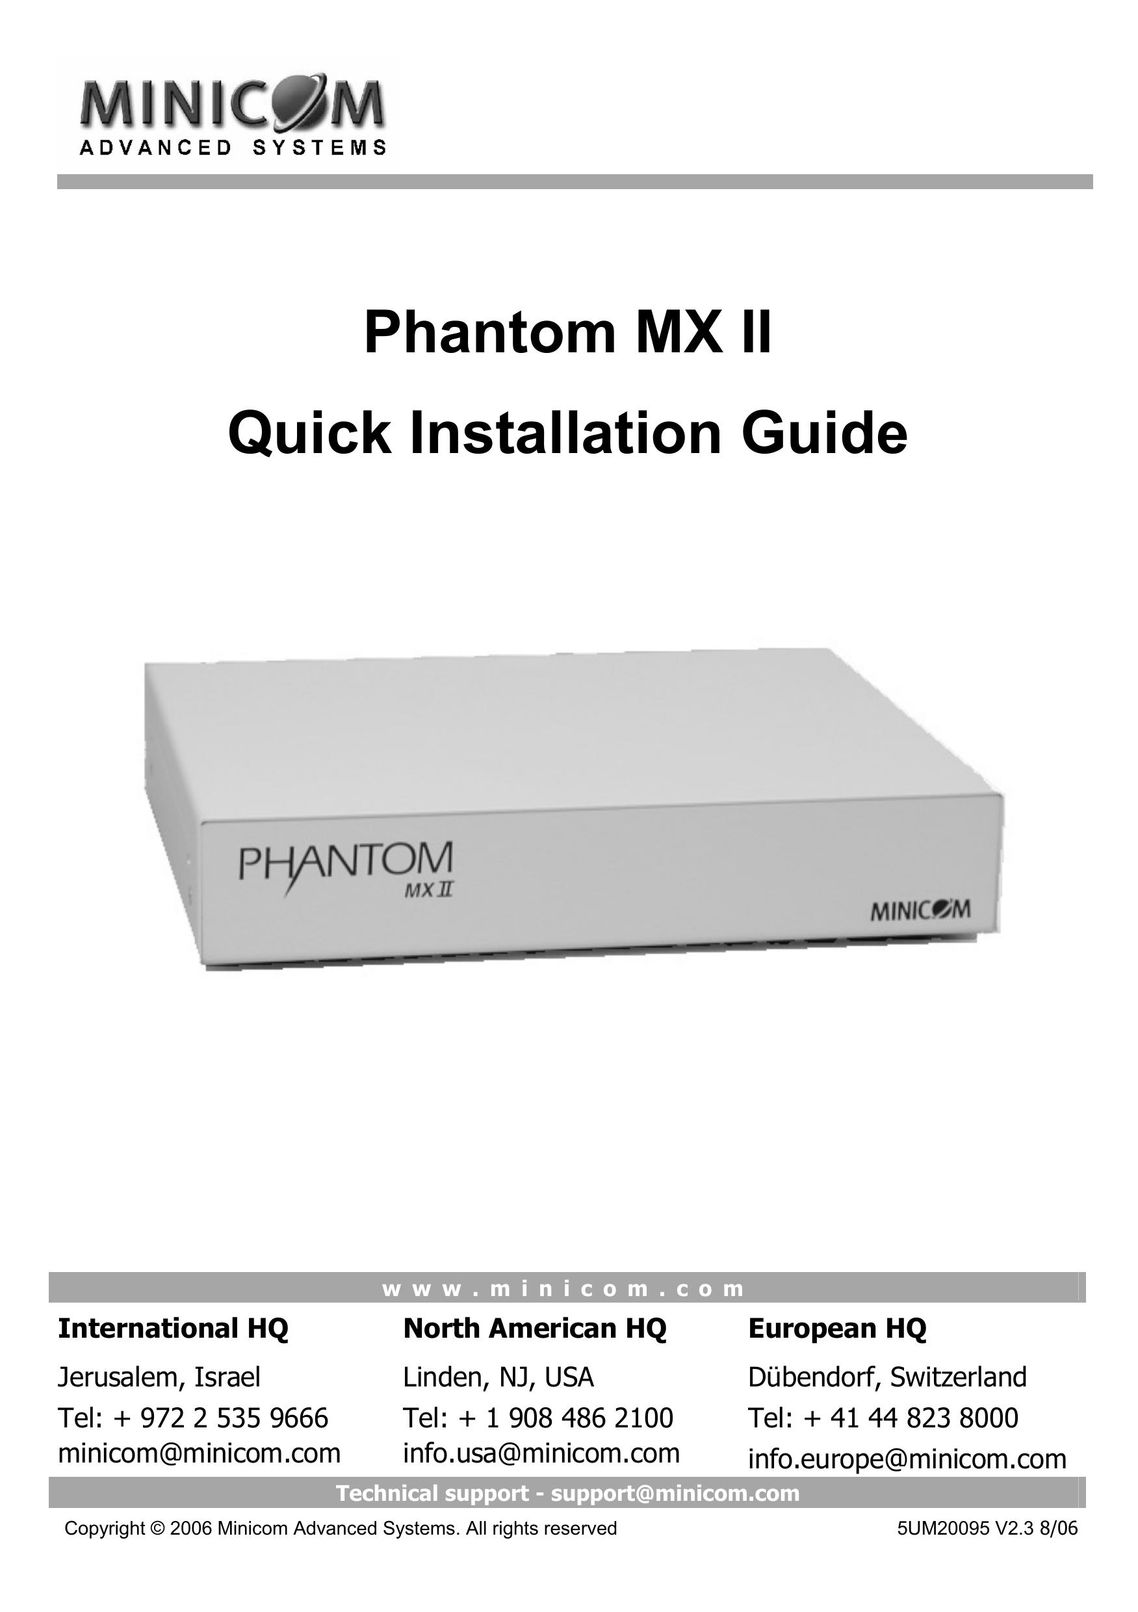 Minicom Advanced Systems MX II Switch User Manual